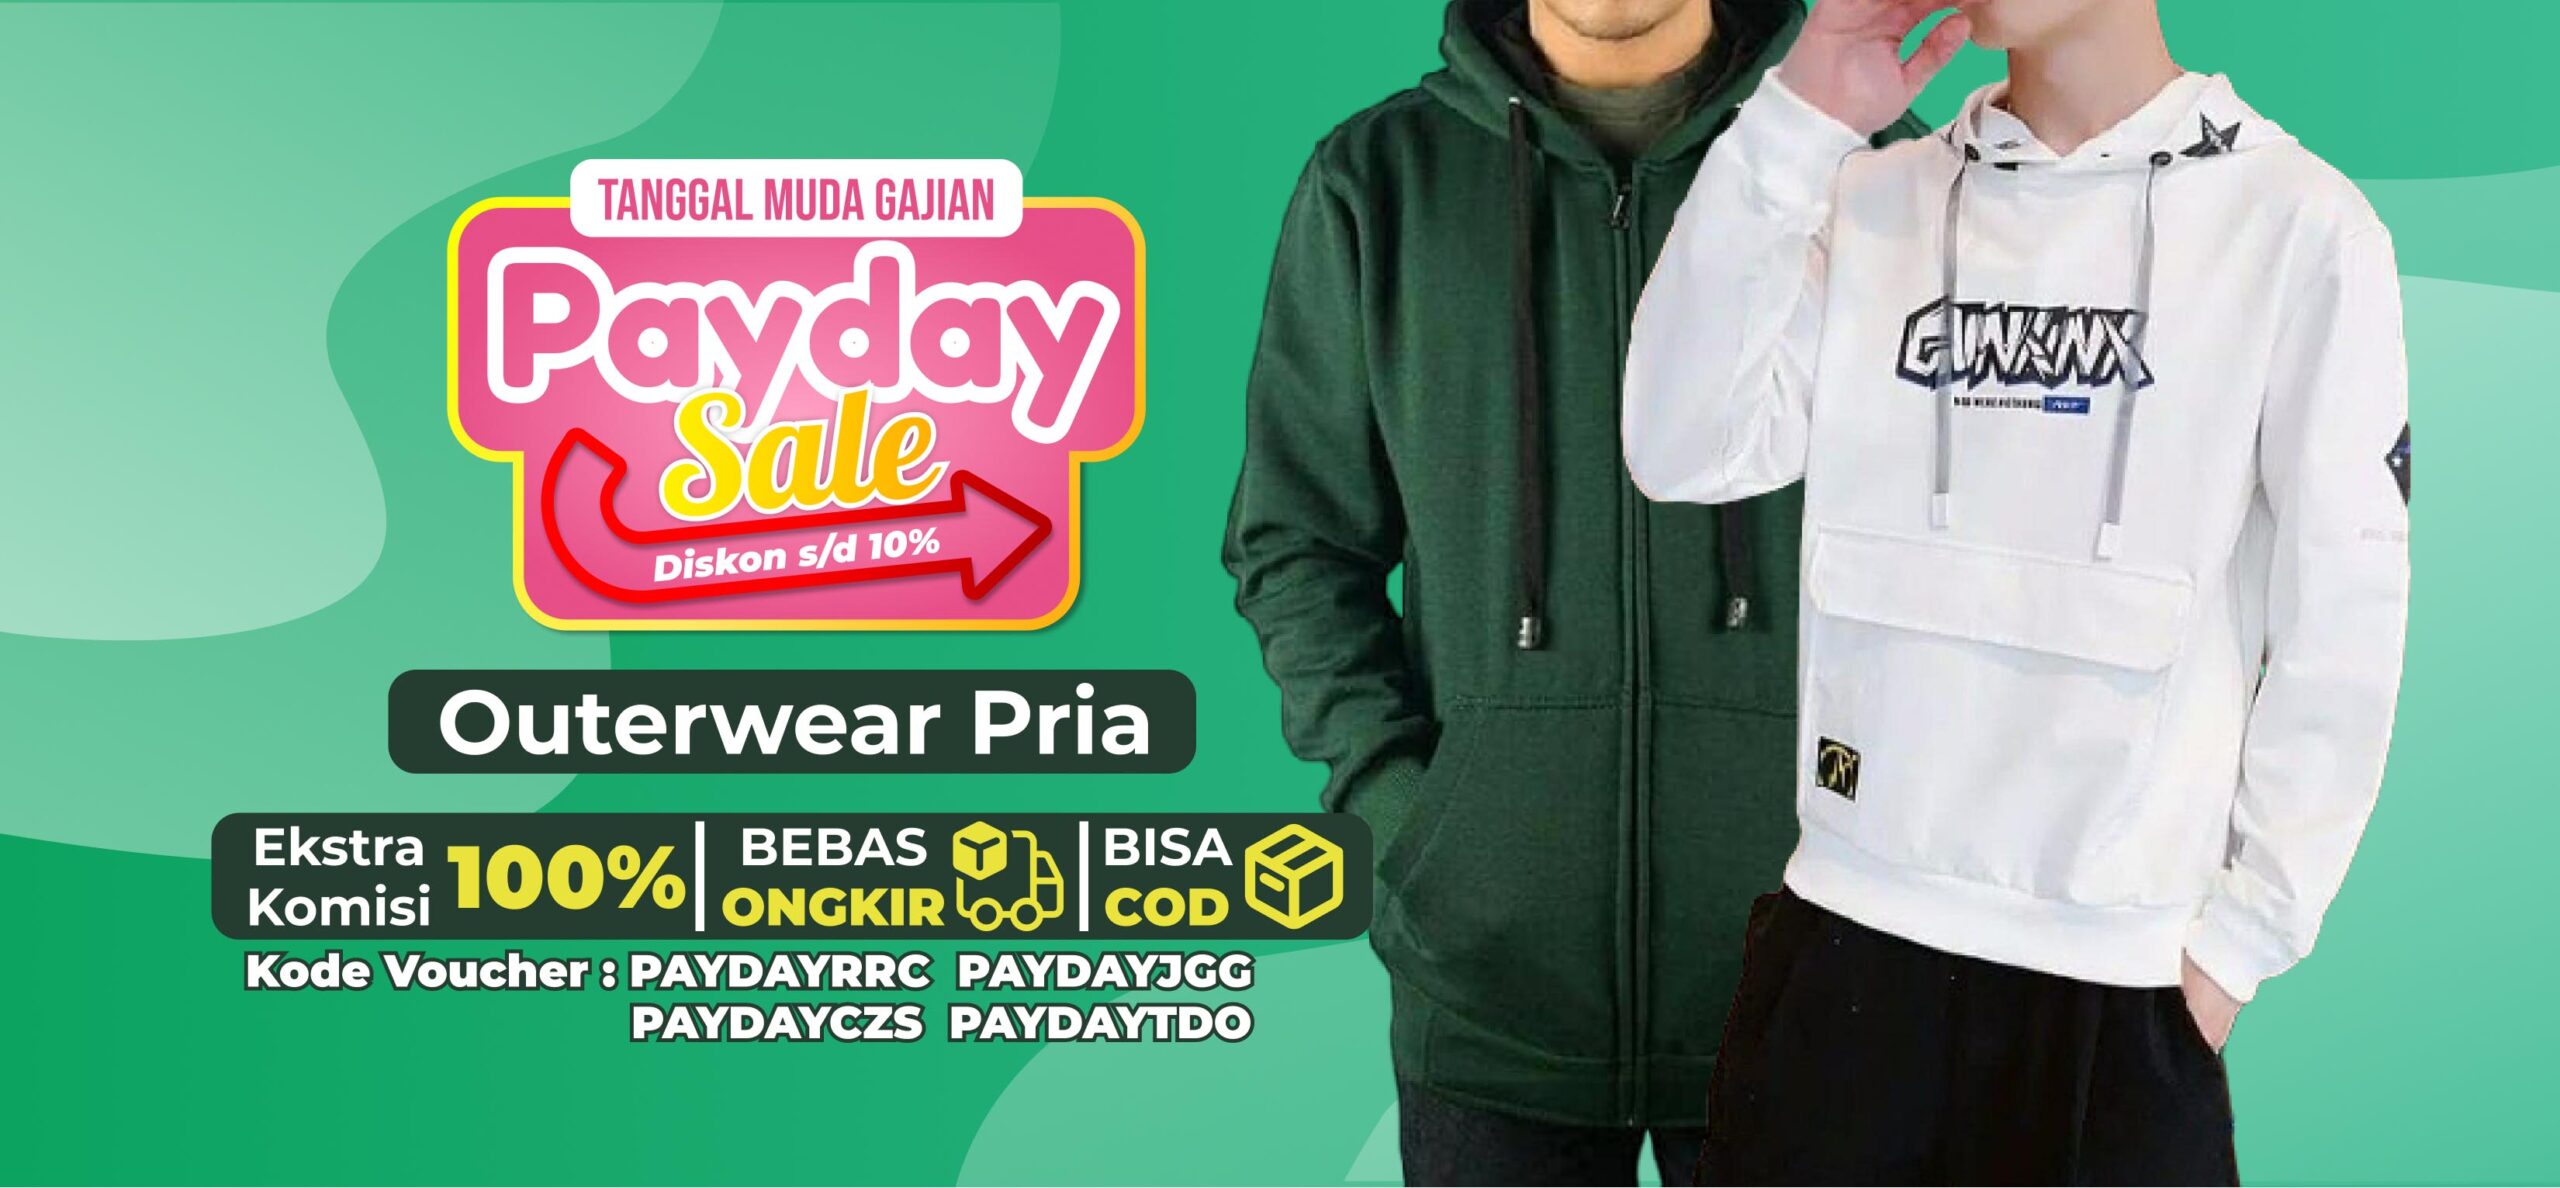 payday selleri outerwear pria